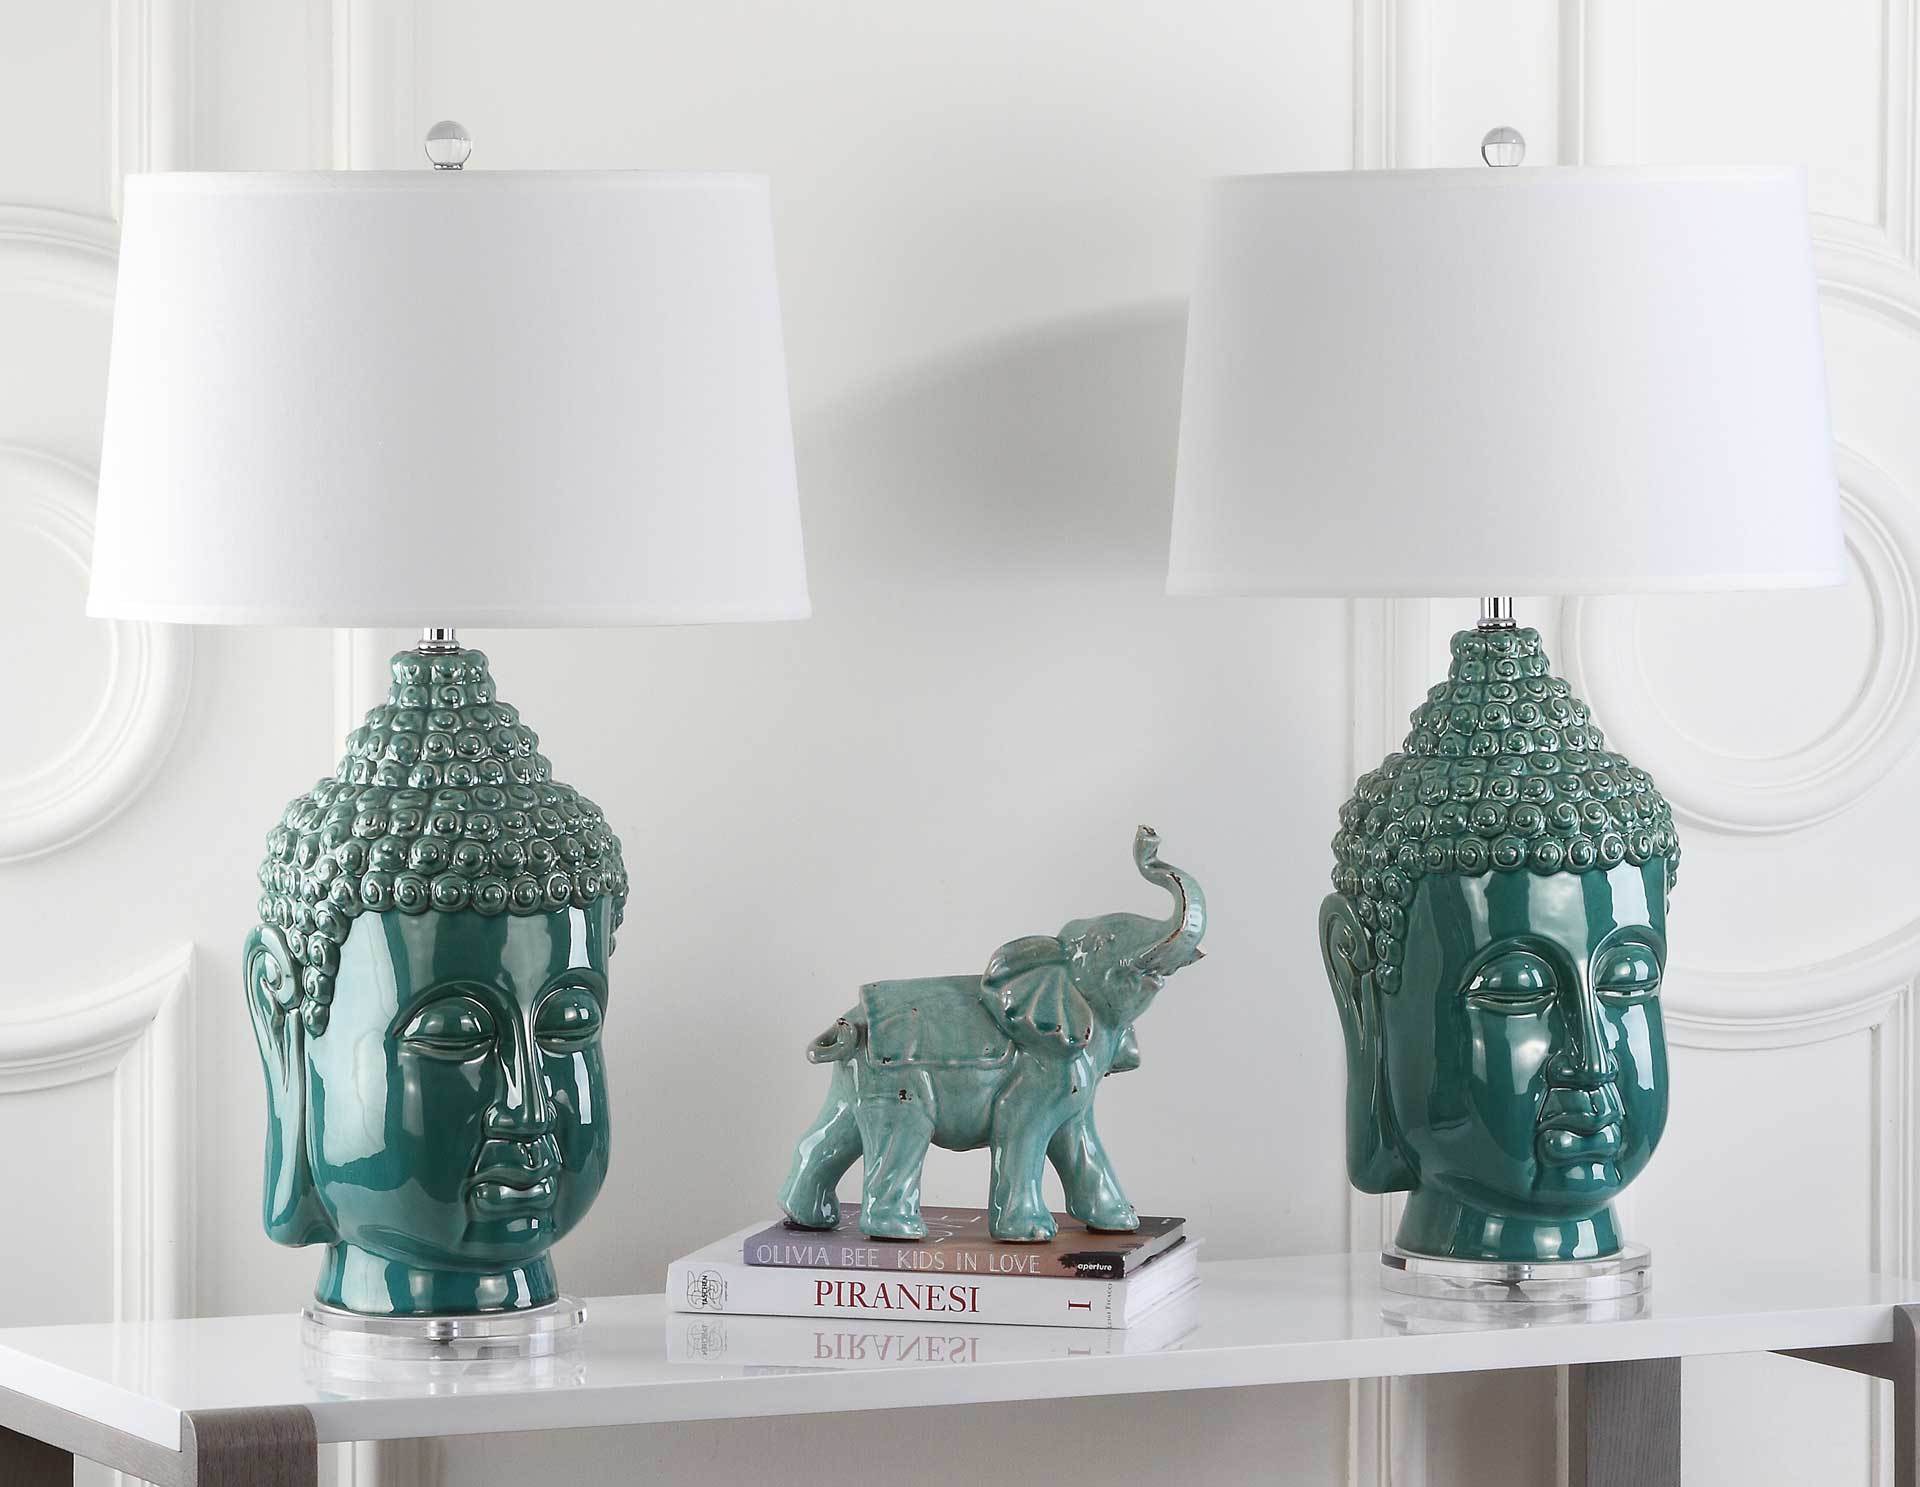 Sean Buddha Table Lamp Blue (Set of 2)